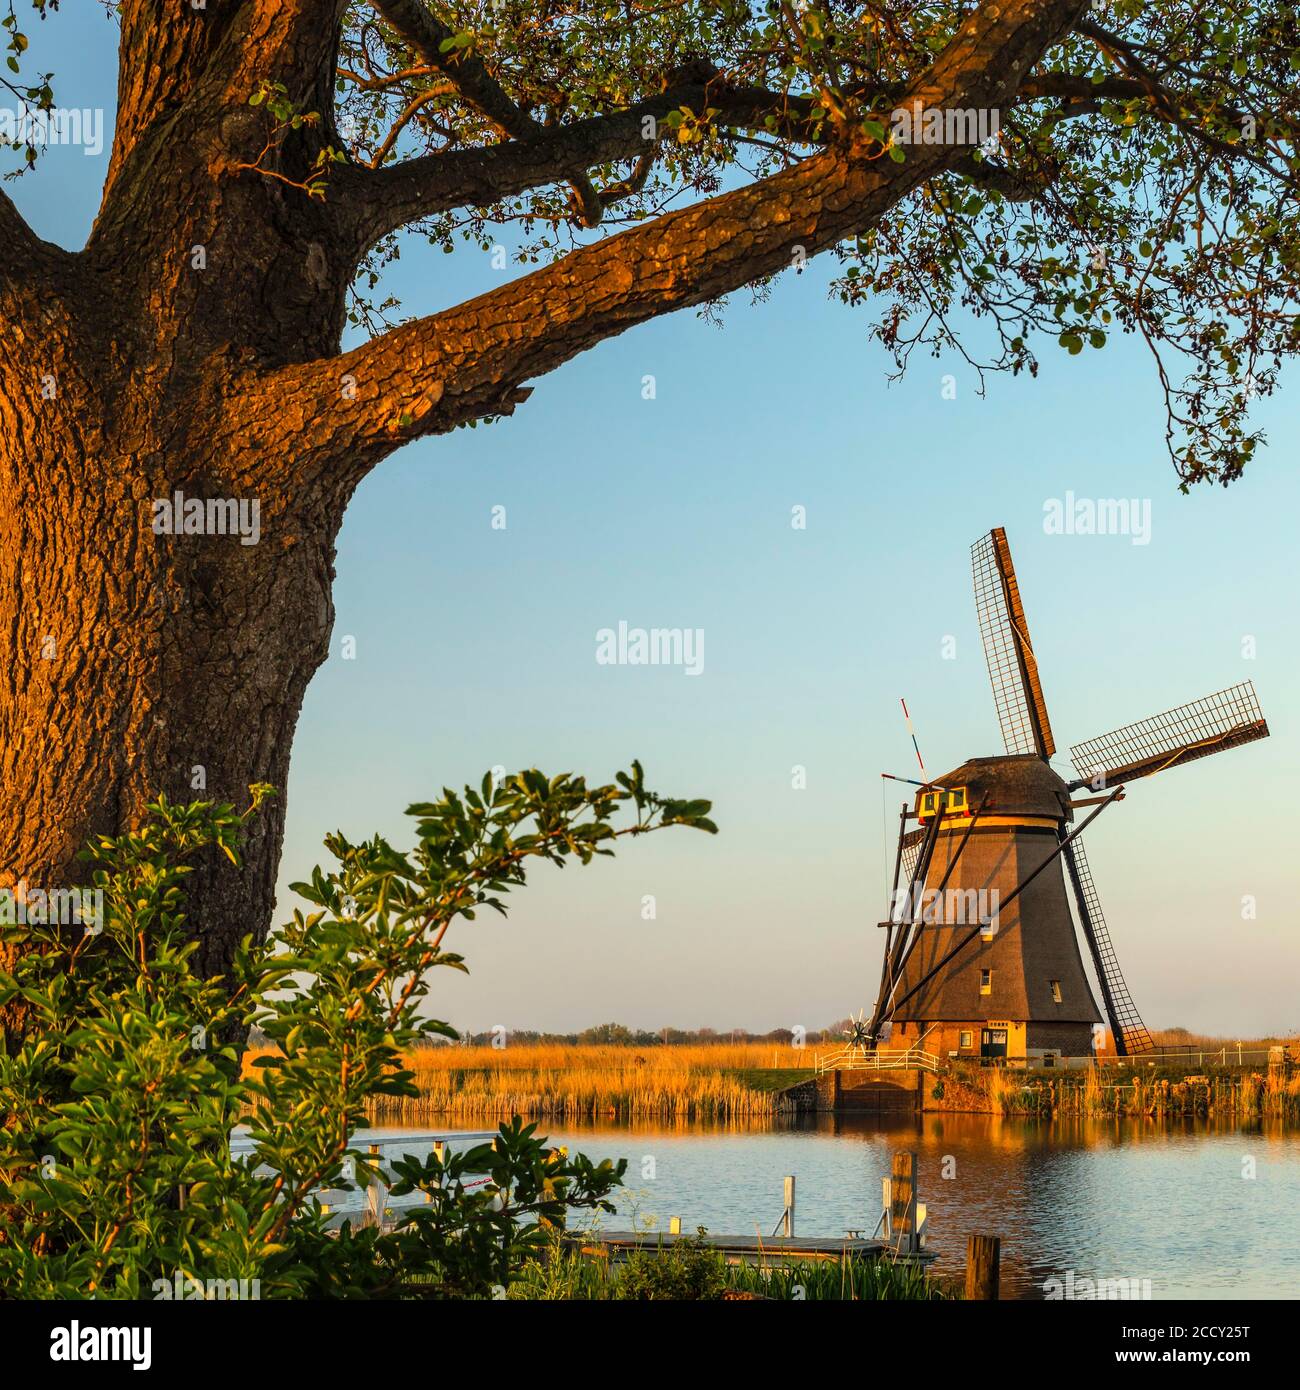 Windmill at sunset, Kinderdijk, UNESCO World Heritage, Zuid-Holland, Netherlands Stock Photo